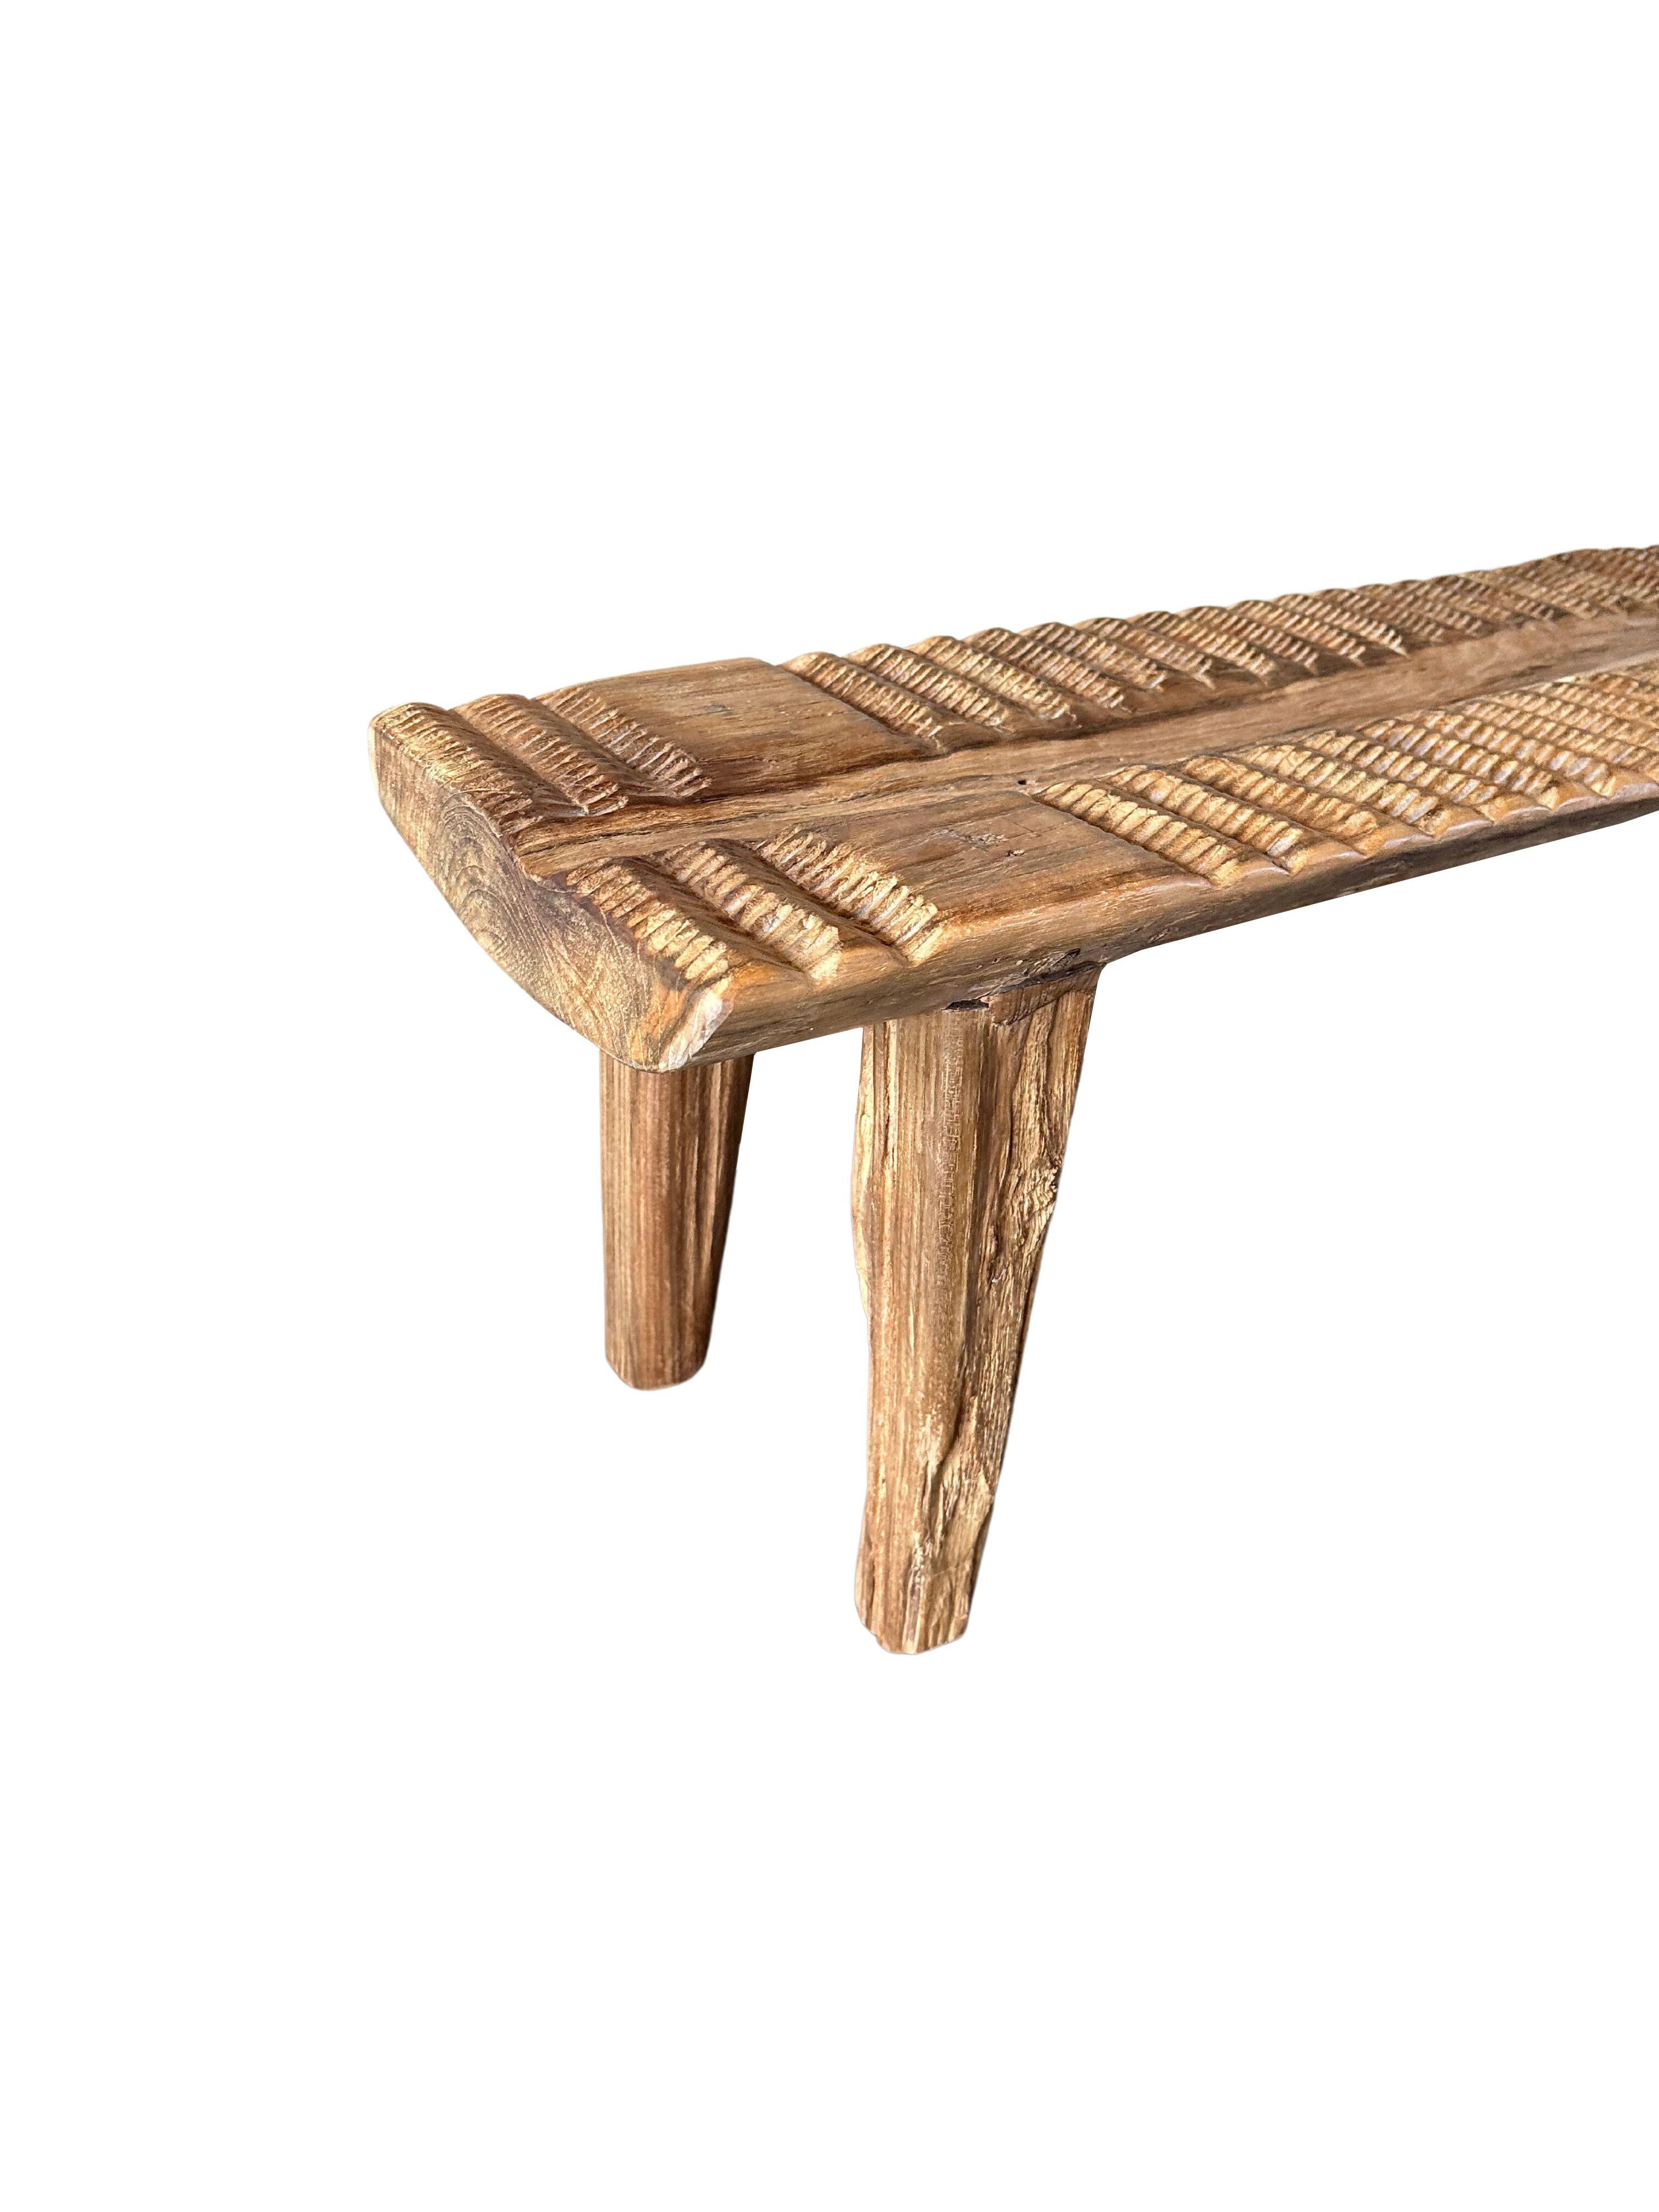 Teak Wood Sculptural Long Bench, Carved Detailing, Modern Organic In Good Condition For Sale In Jimbaran, Bali